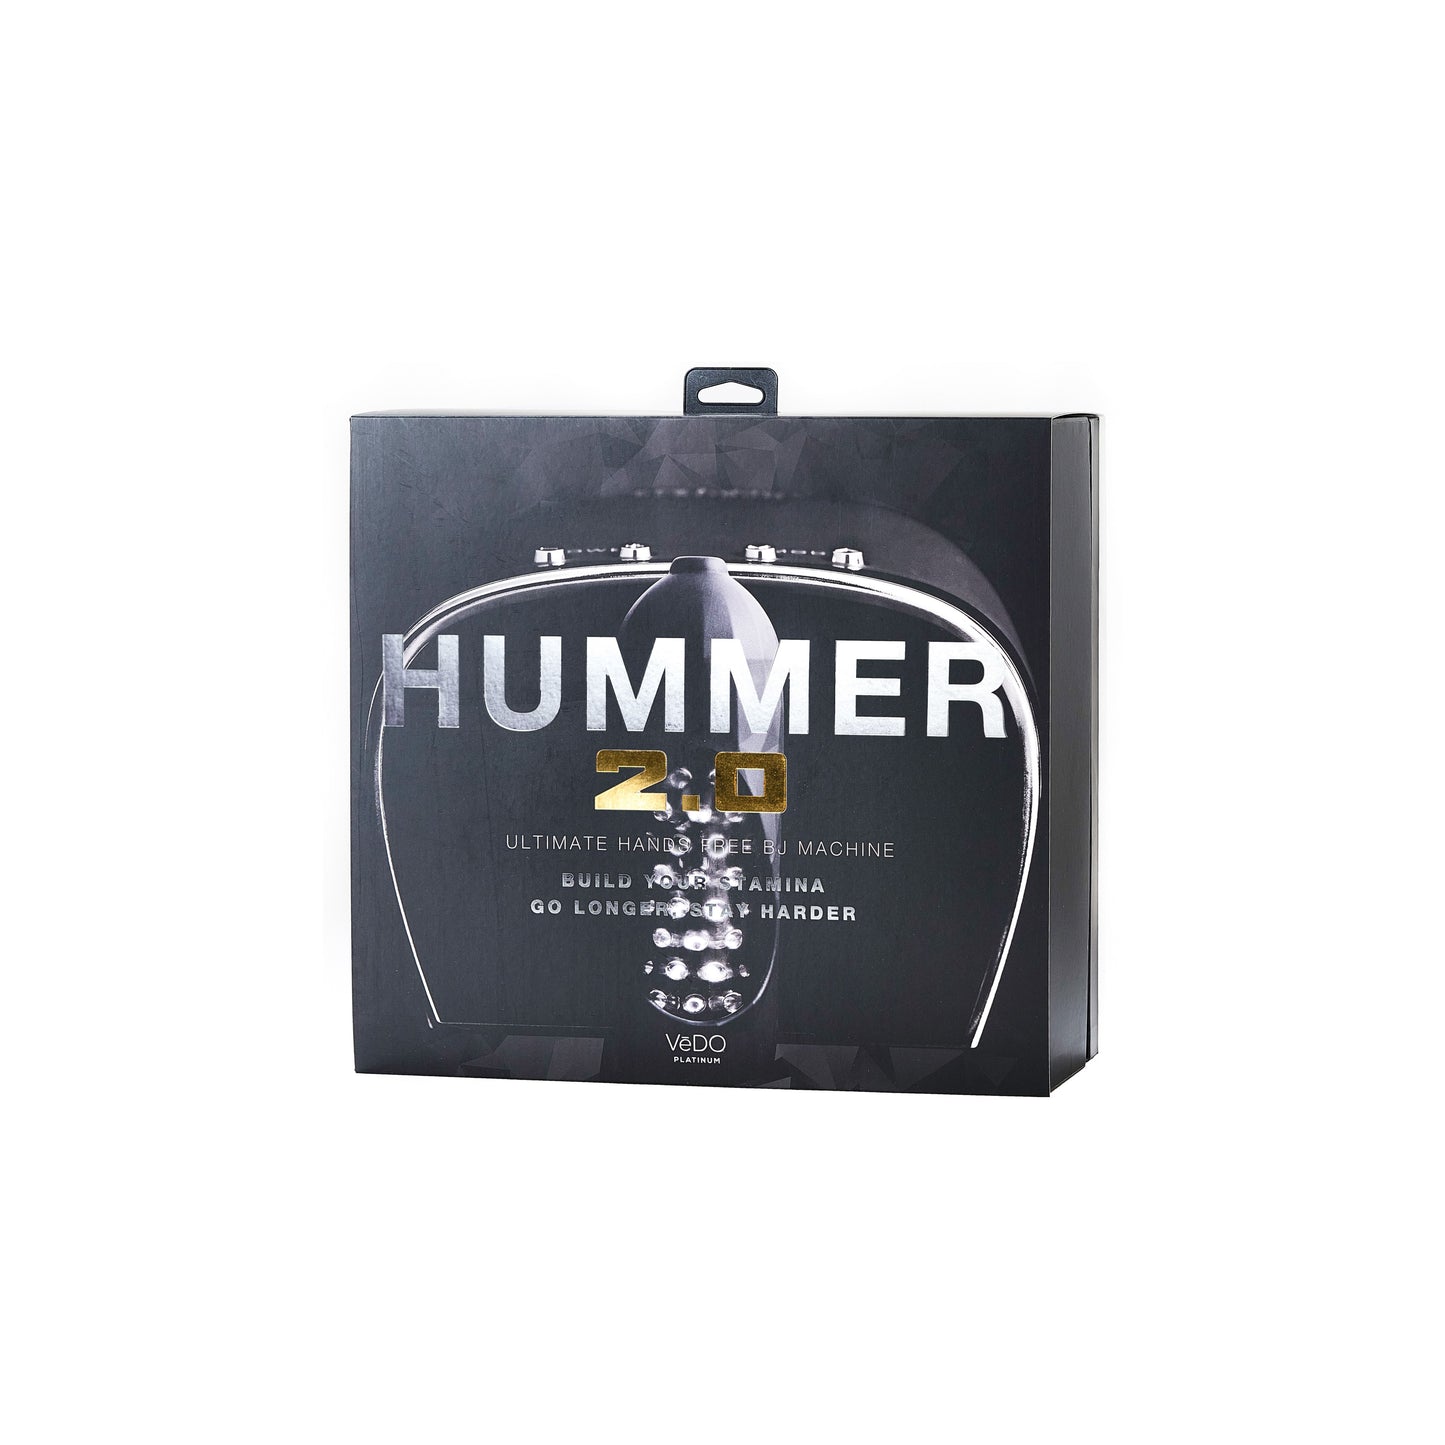 Hummer 2.0 - Ultimate Bj Machine